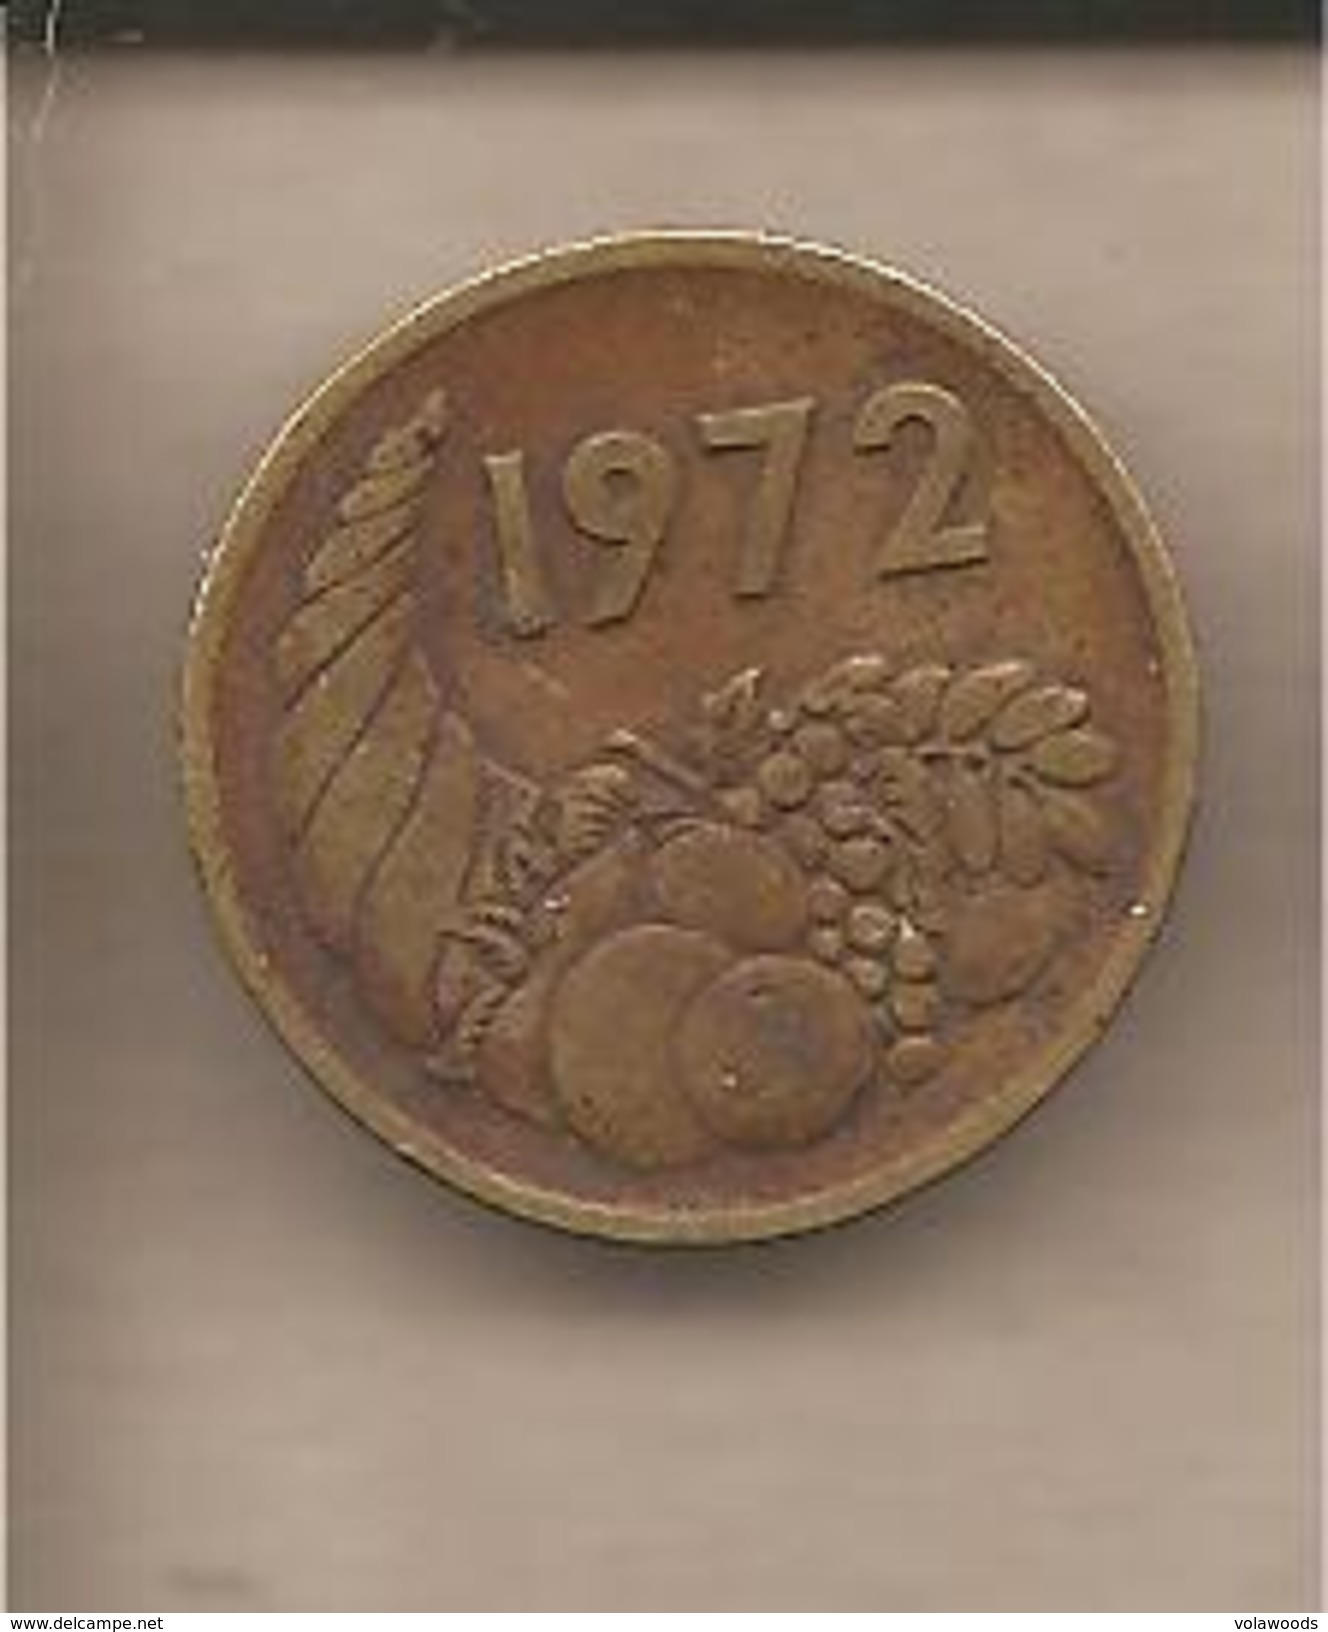 Algeria - Moneta Circolata Da 20 Centesimi "Fao" - 1972 - Algeria